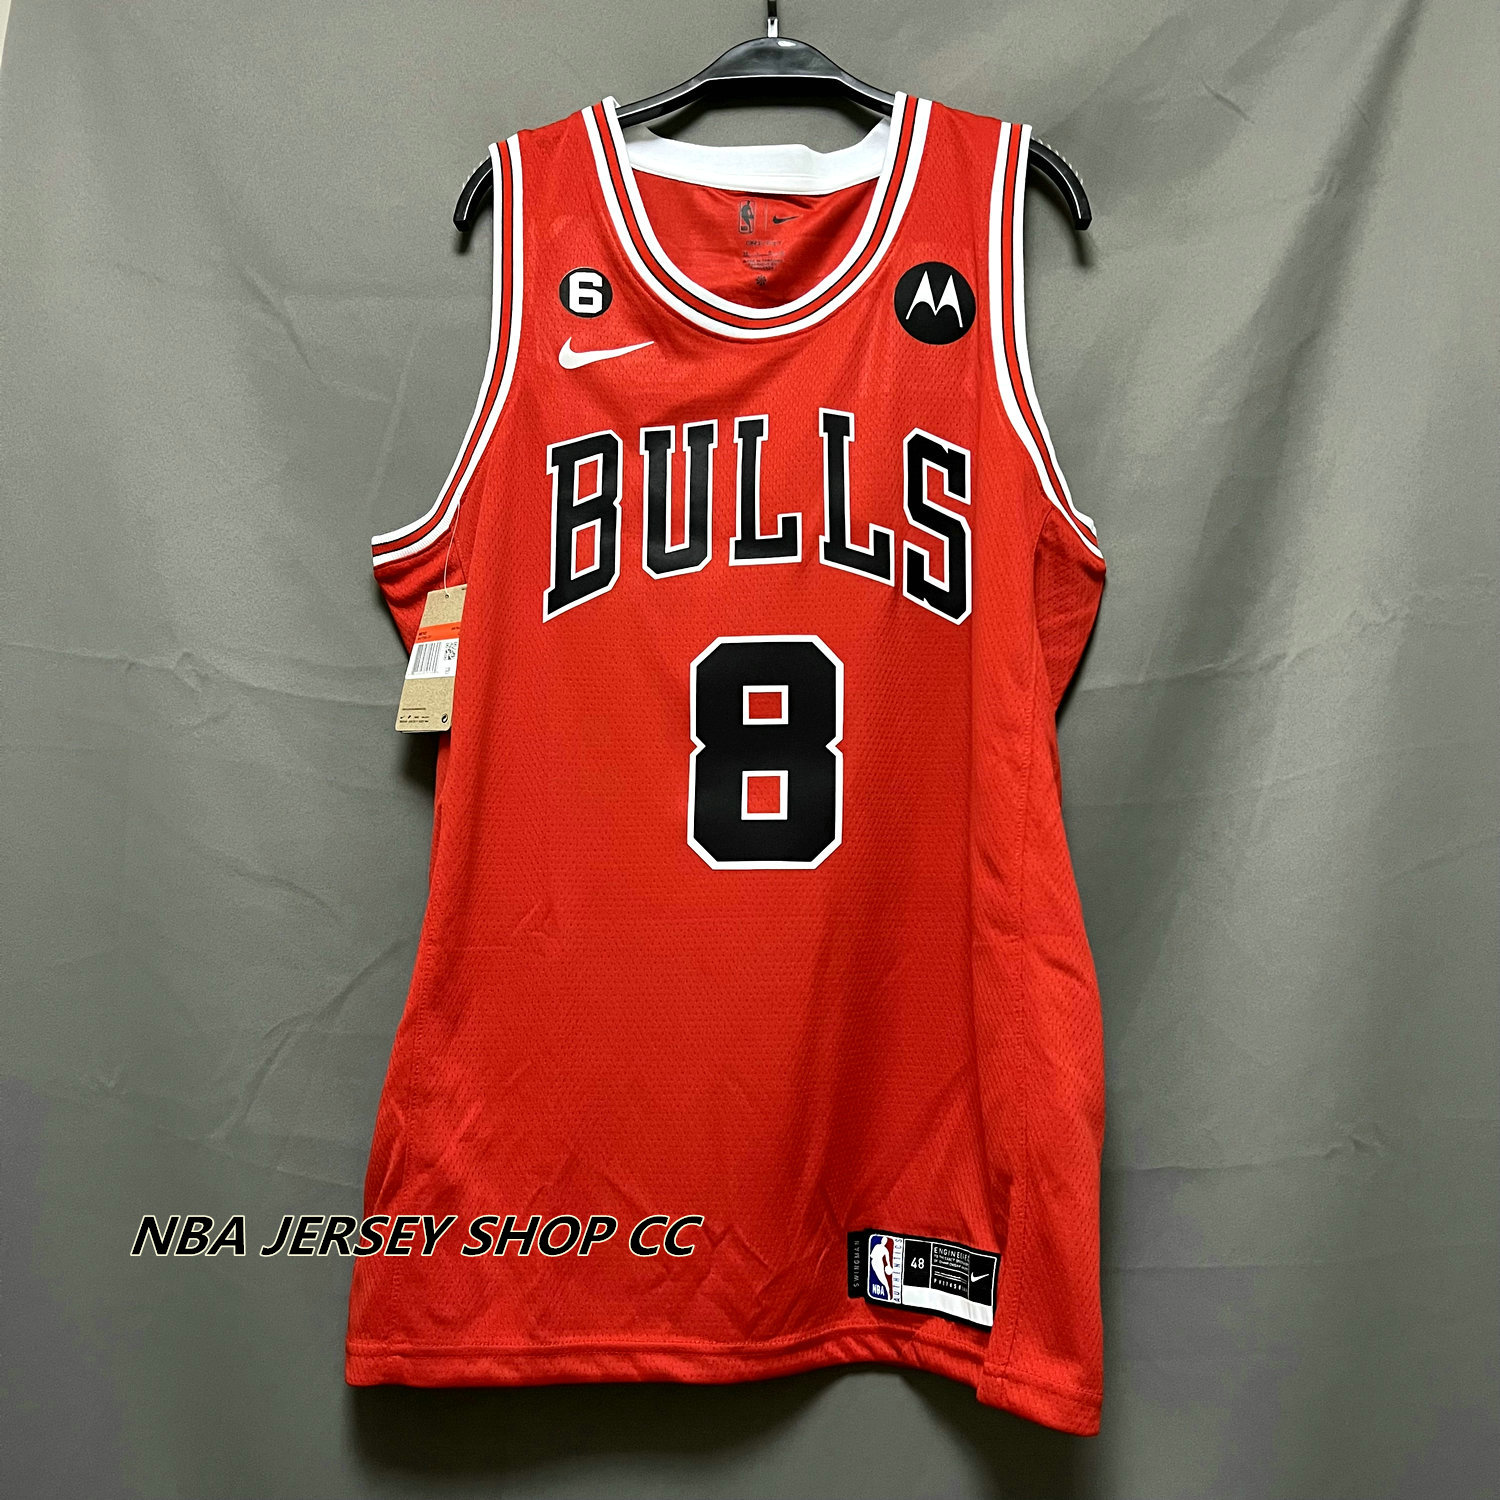 Zach LaVine Bulls Icon Edition Men's Nike NBA Swingman Jersey Size